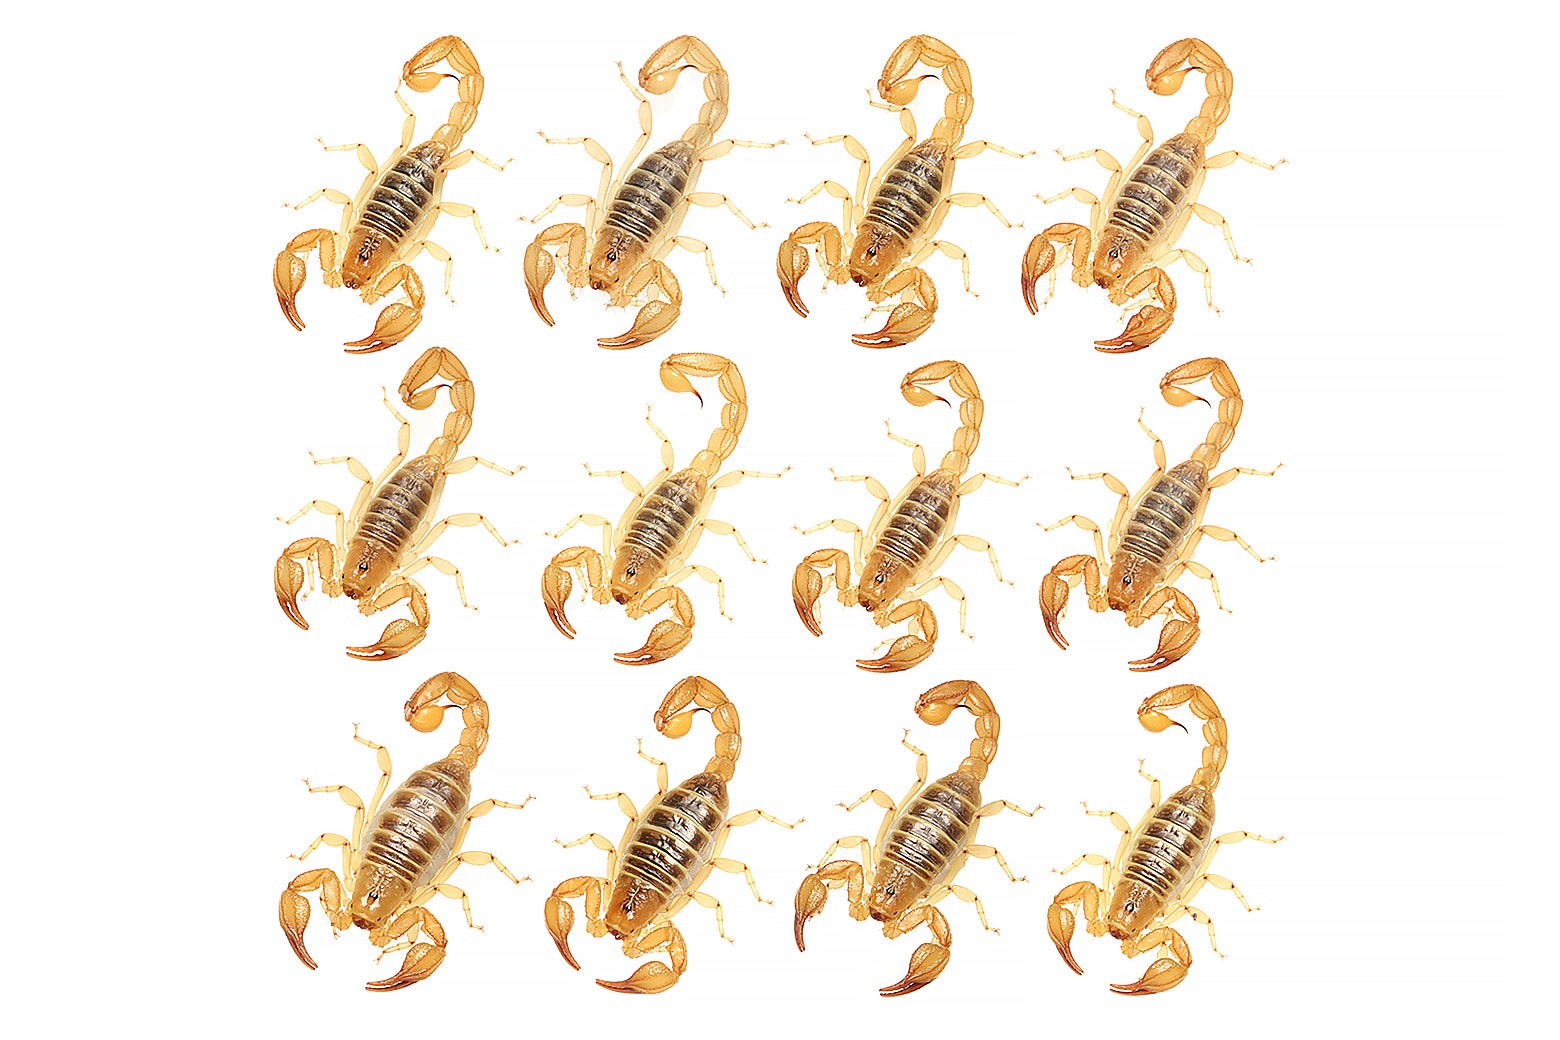 Three rows of three scorpions